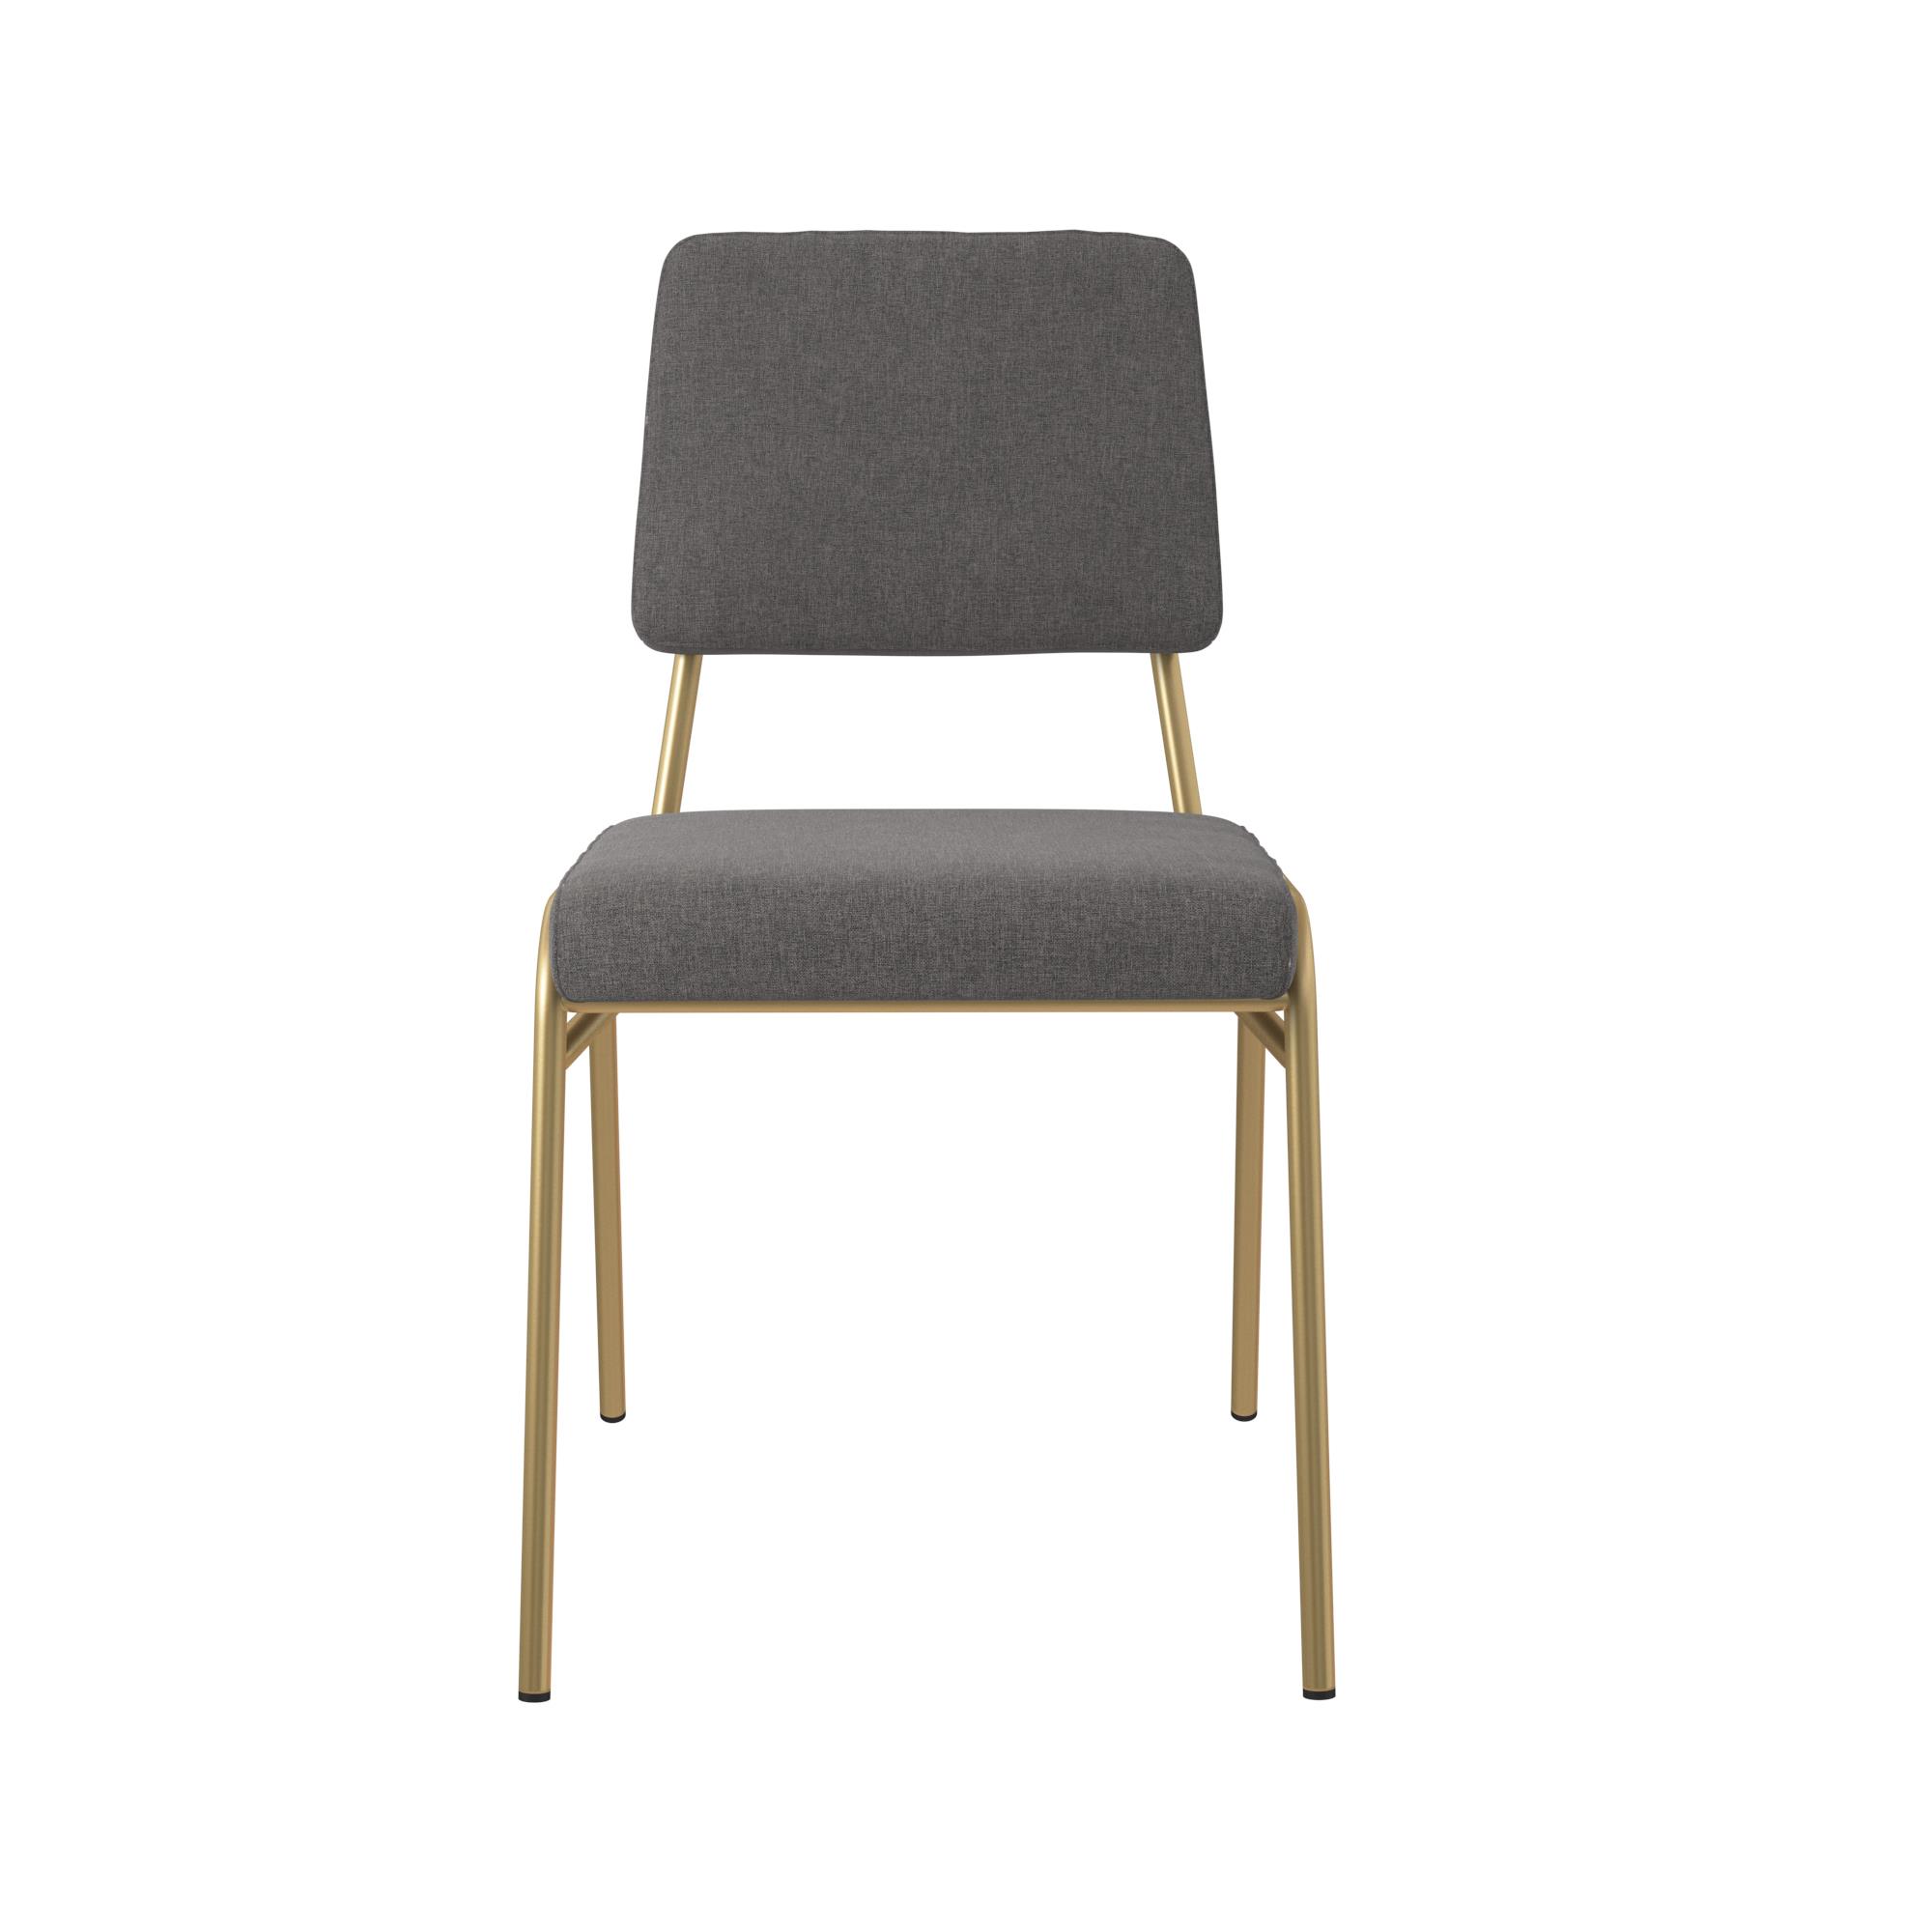 Novogratz Lex Upholstered Dining Chair, Gold Frame & Light Grey Linen Upholstery - image 6 of 14